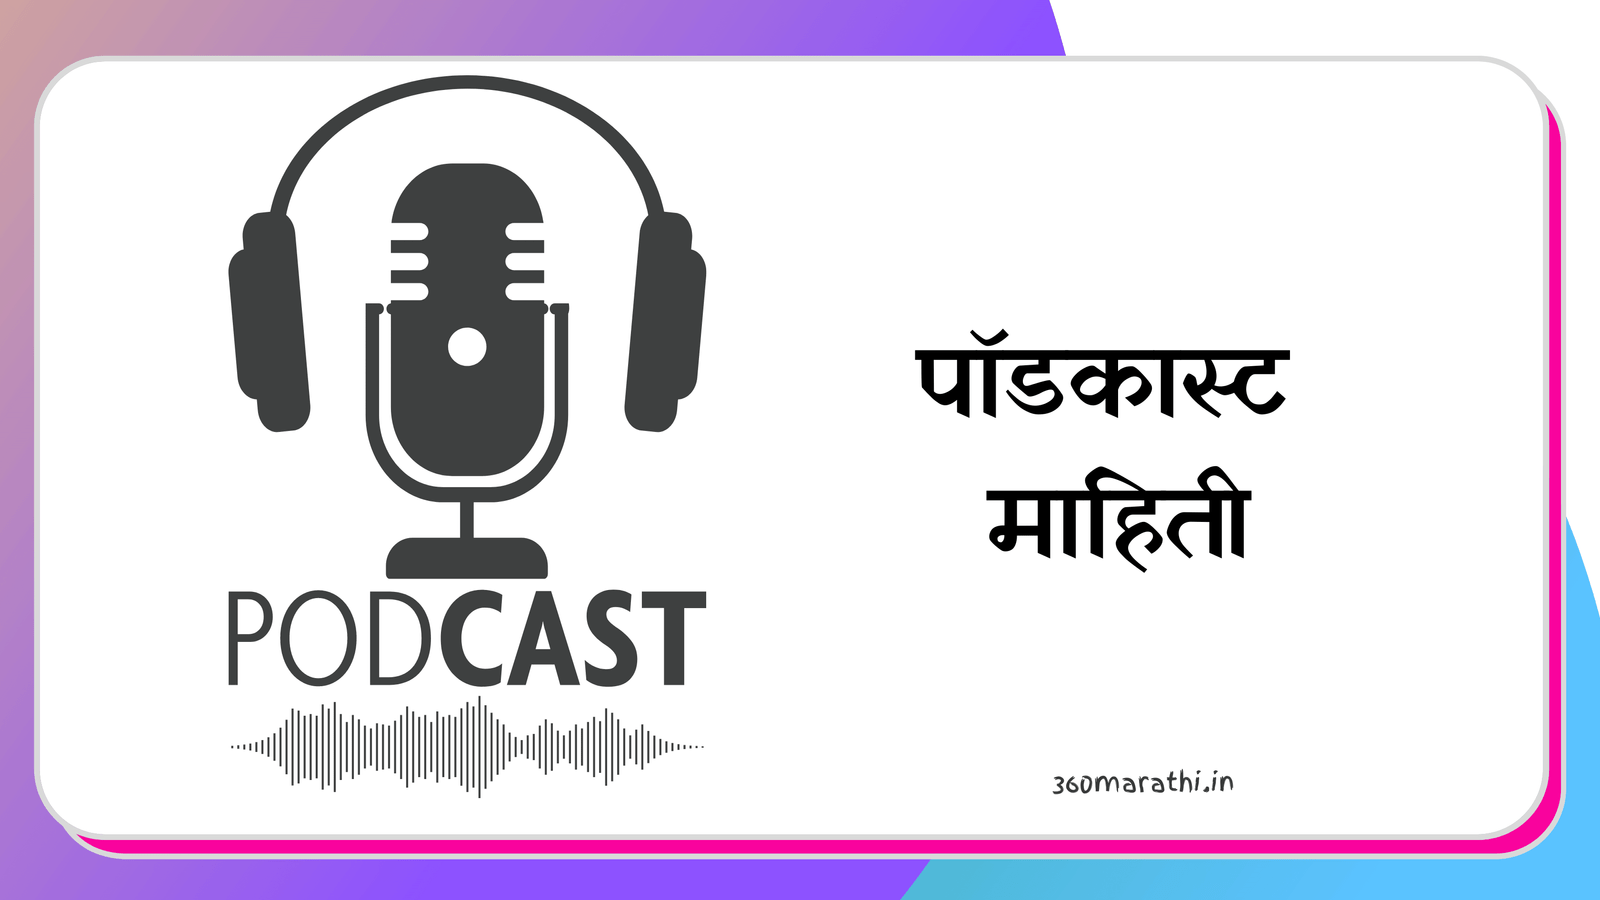 Podcast Information In Marathi